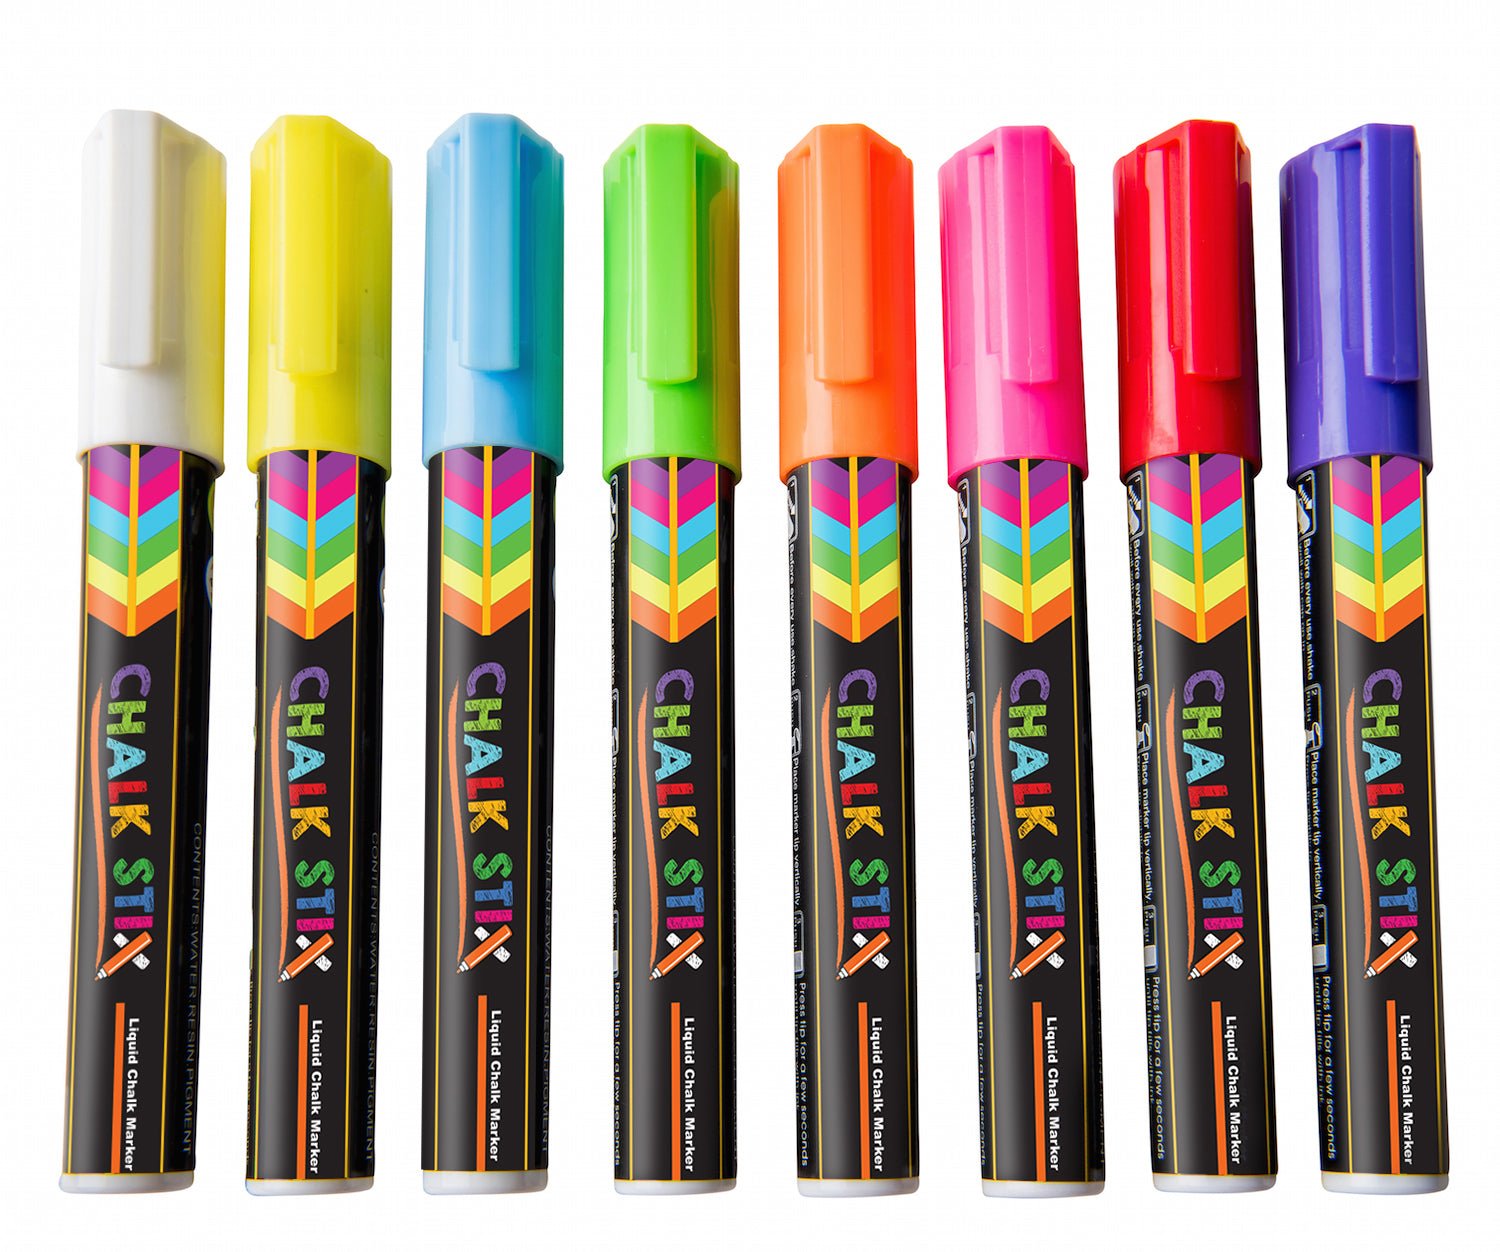  Artsunlvy 8 Colors Chalk Markers,Erasable, Non-Toxic